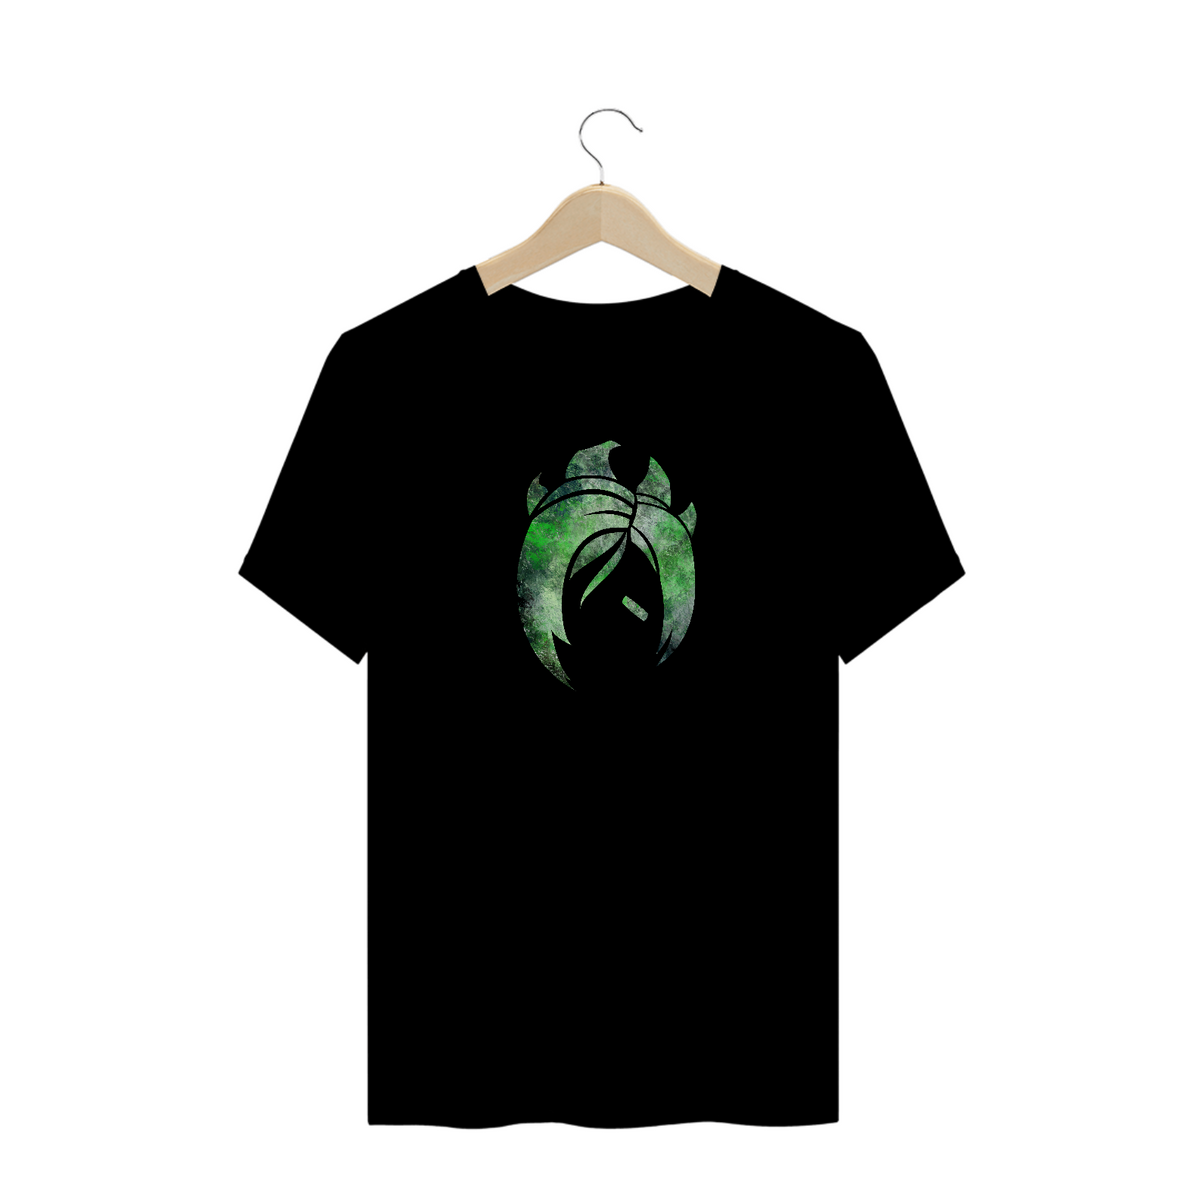 Nome do produto: T-Shirt Riven (LEAGUE OF LEGENDS)